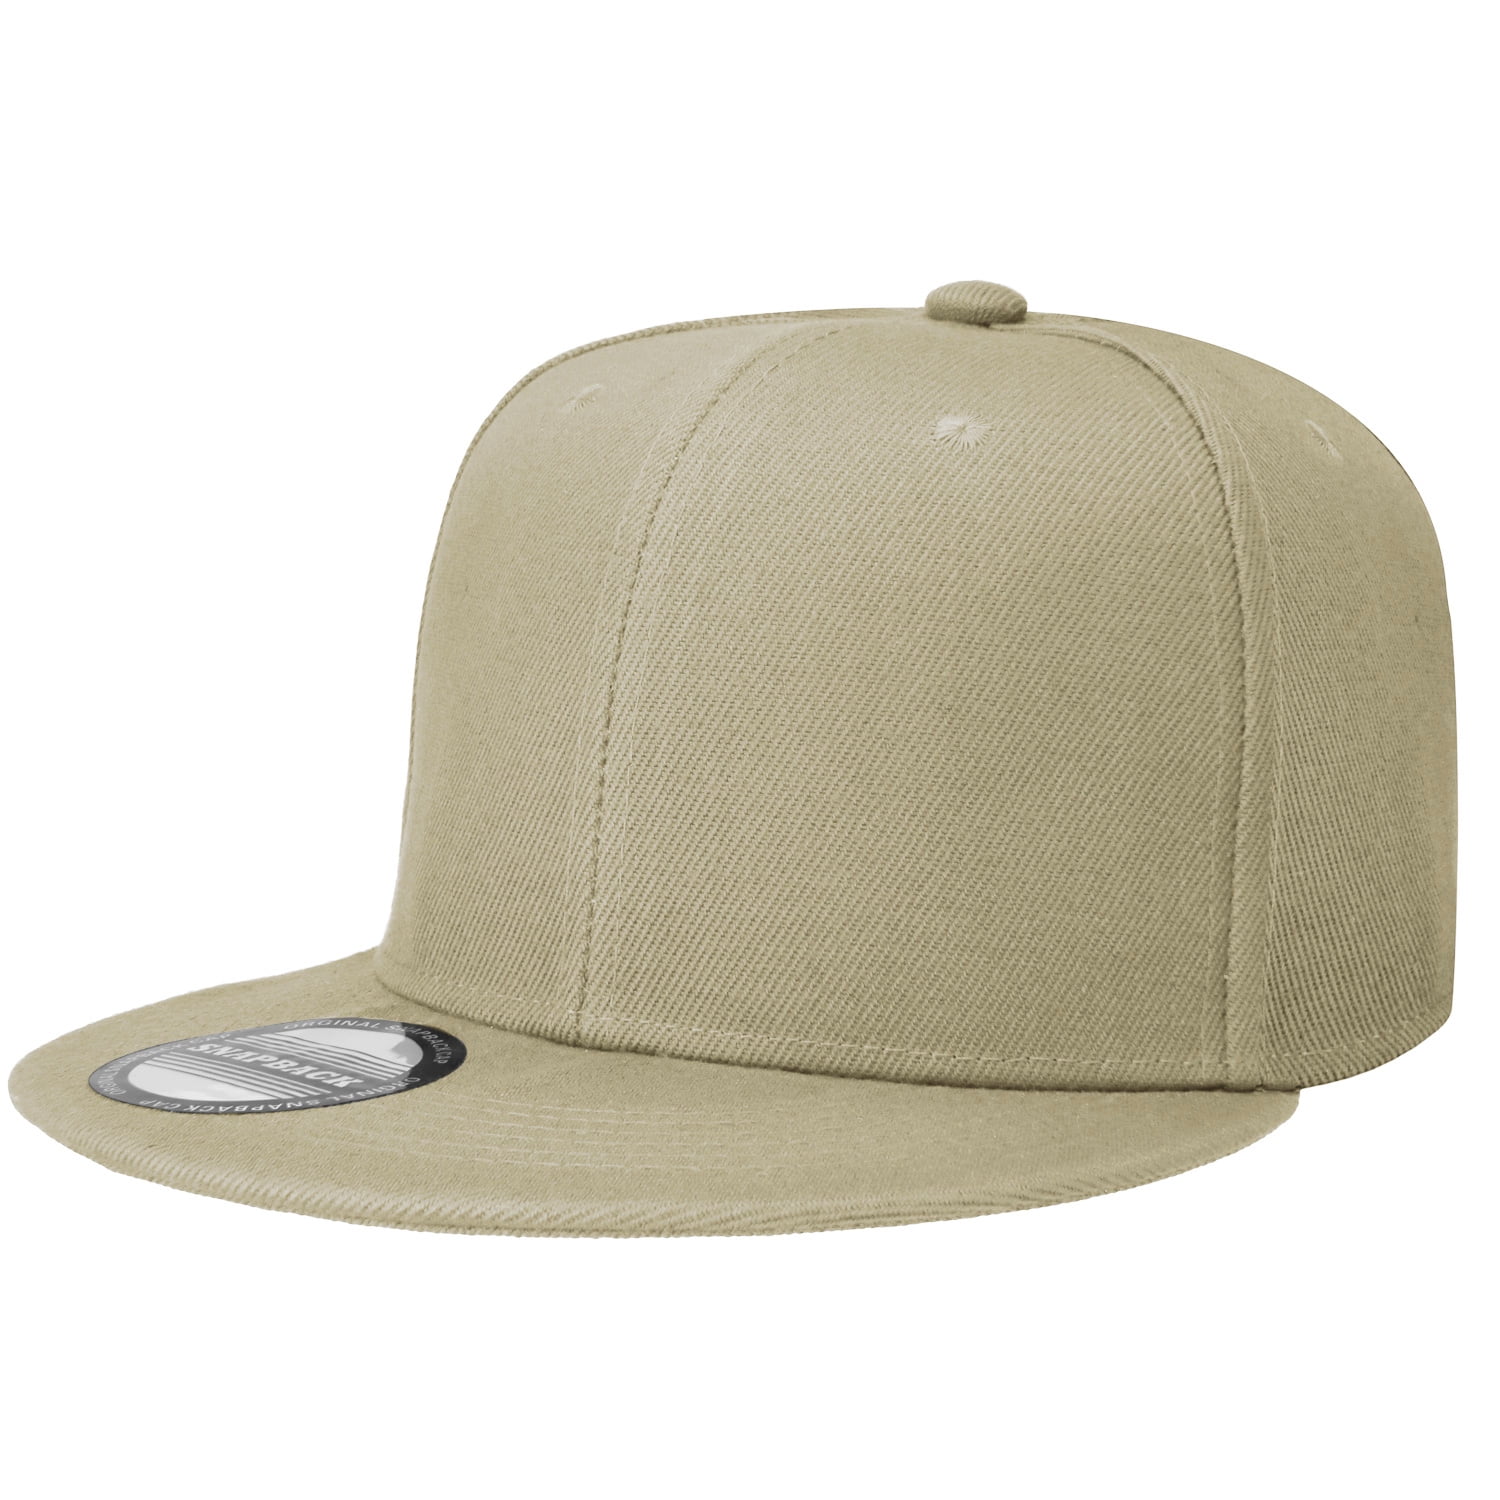 BO$$ SNAPBACK HAT 2-TONE FASHION HIP HOP ADJUSTABLE FLATBILL CAP 